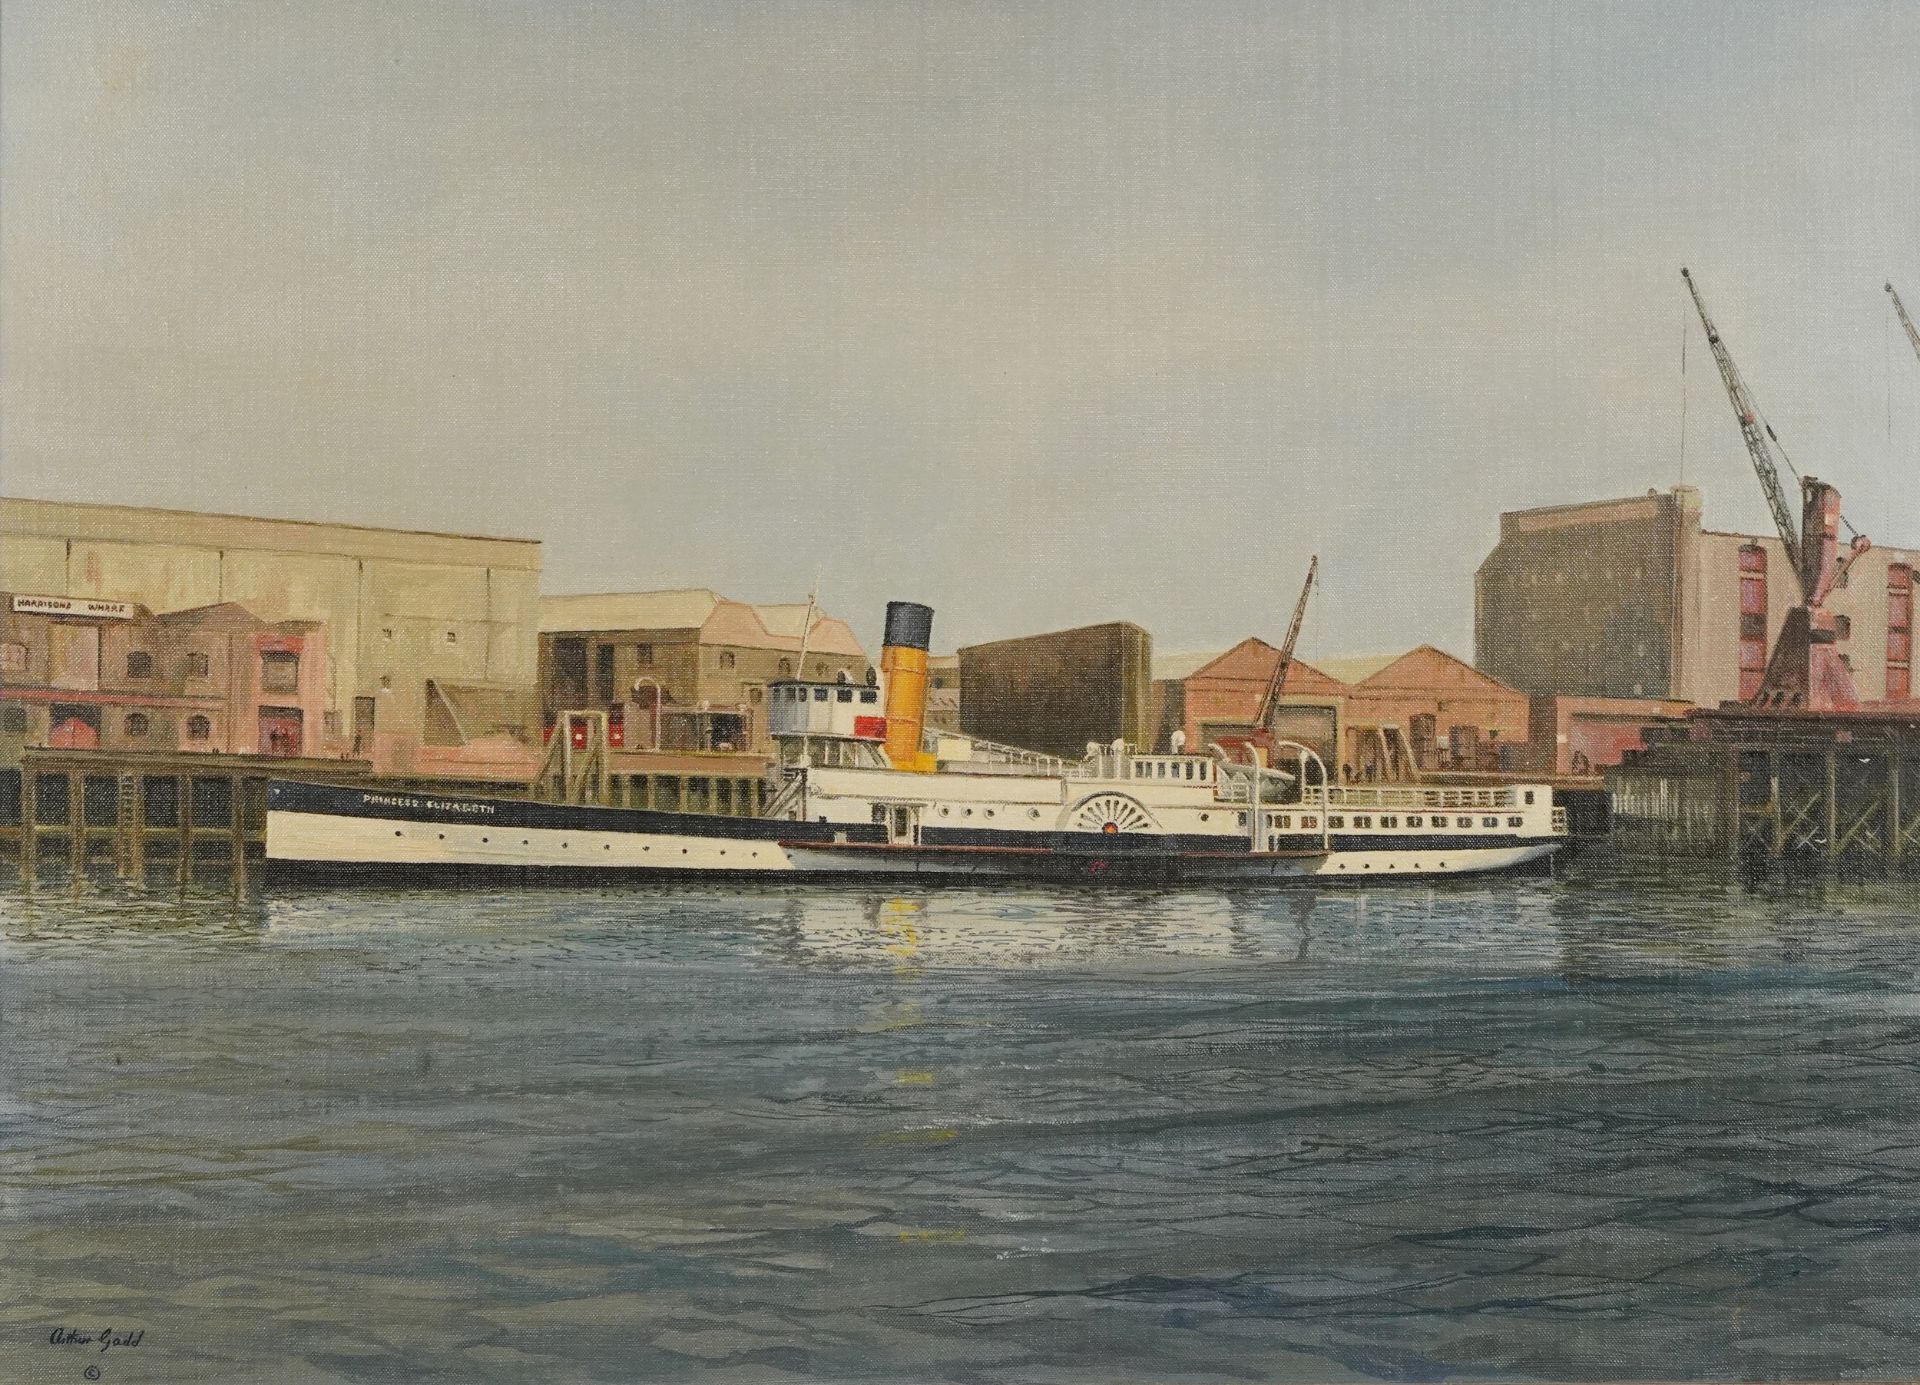 Arthur Gadd - Princess Elizabeth paddle steamer, Harrison's Warf, oil on canvas, details verso,